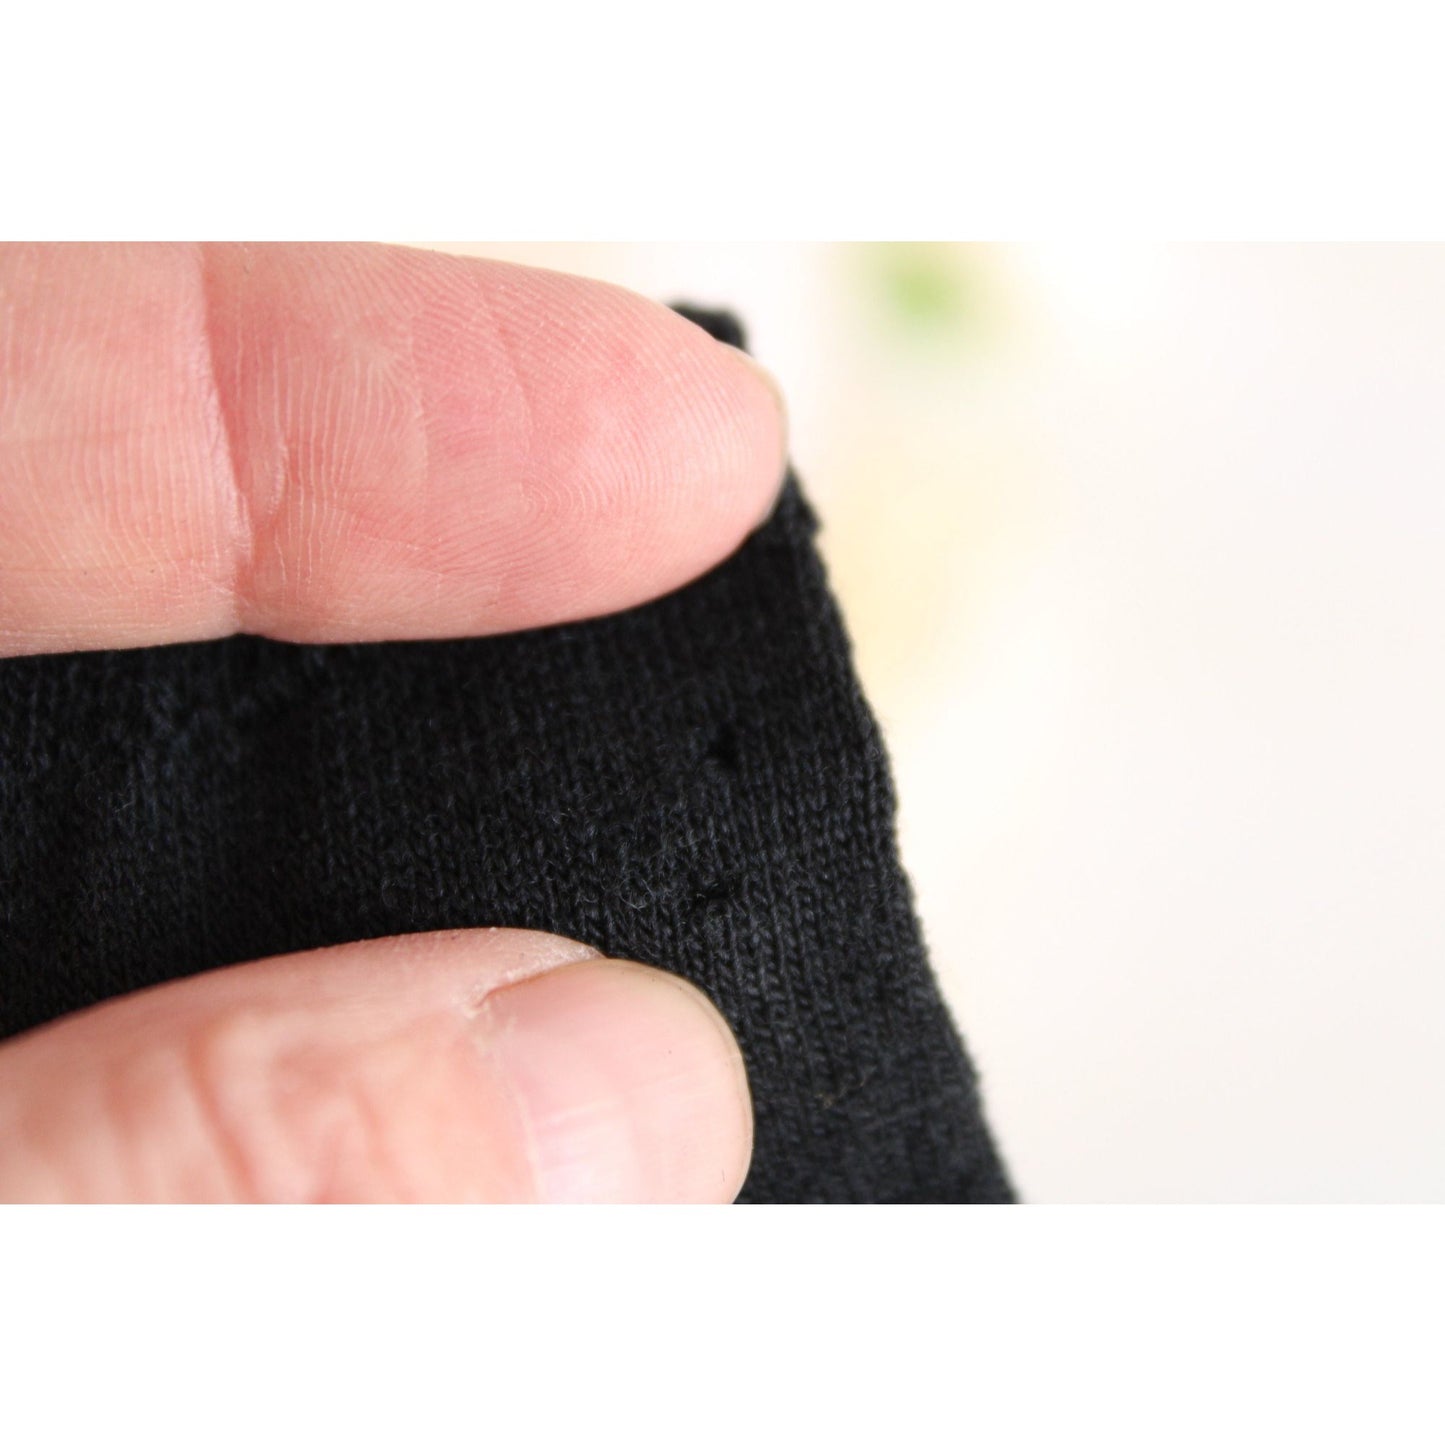 Vintage 1940s Men's Black Wool Socks, New With Tags